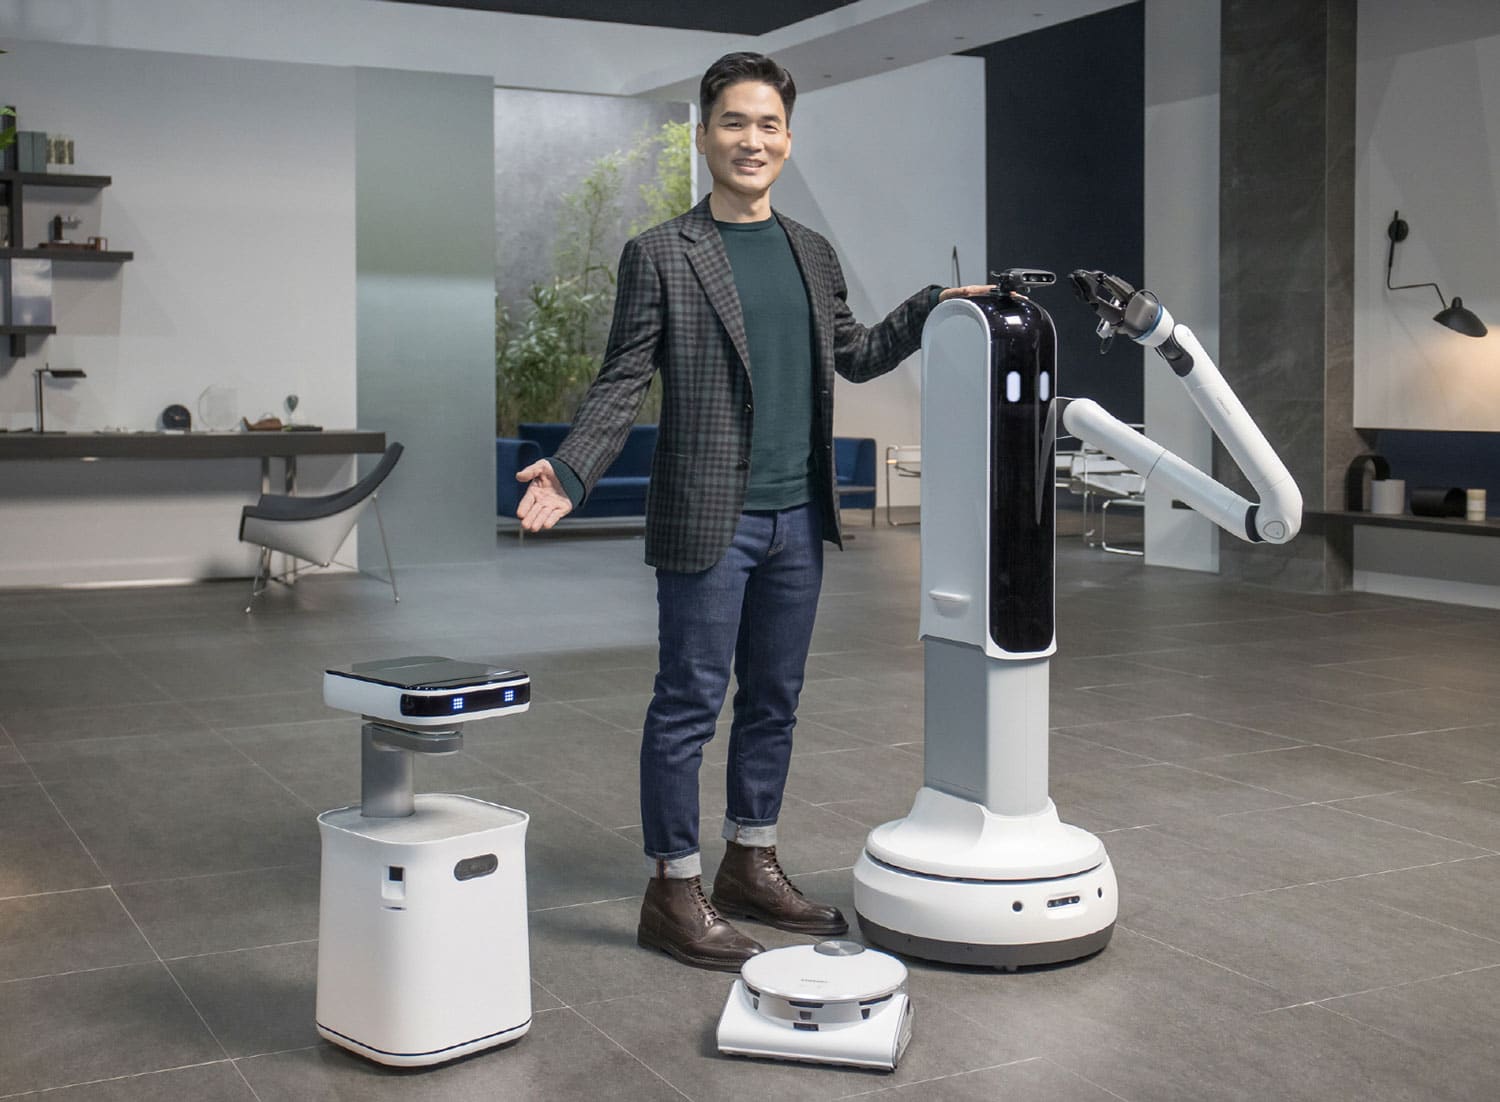 Træde tilbage pedal Minefelt Samsung showcased smart household assistant robots to make everyday life  easier